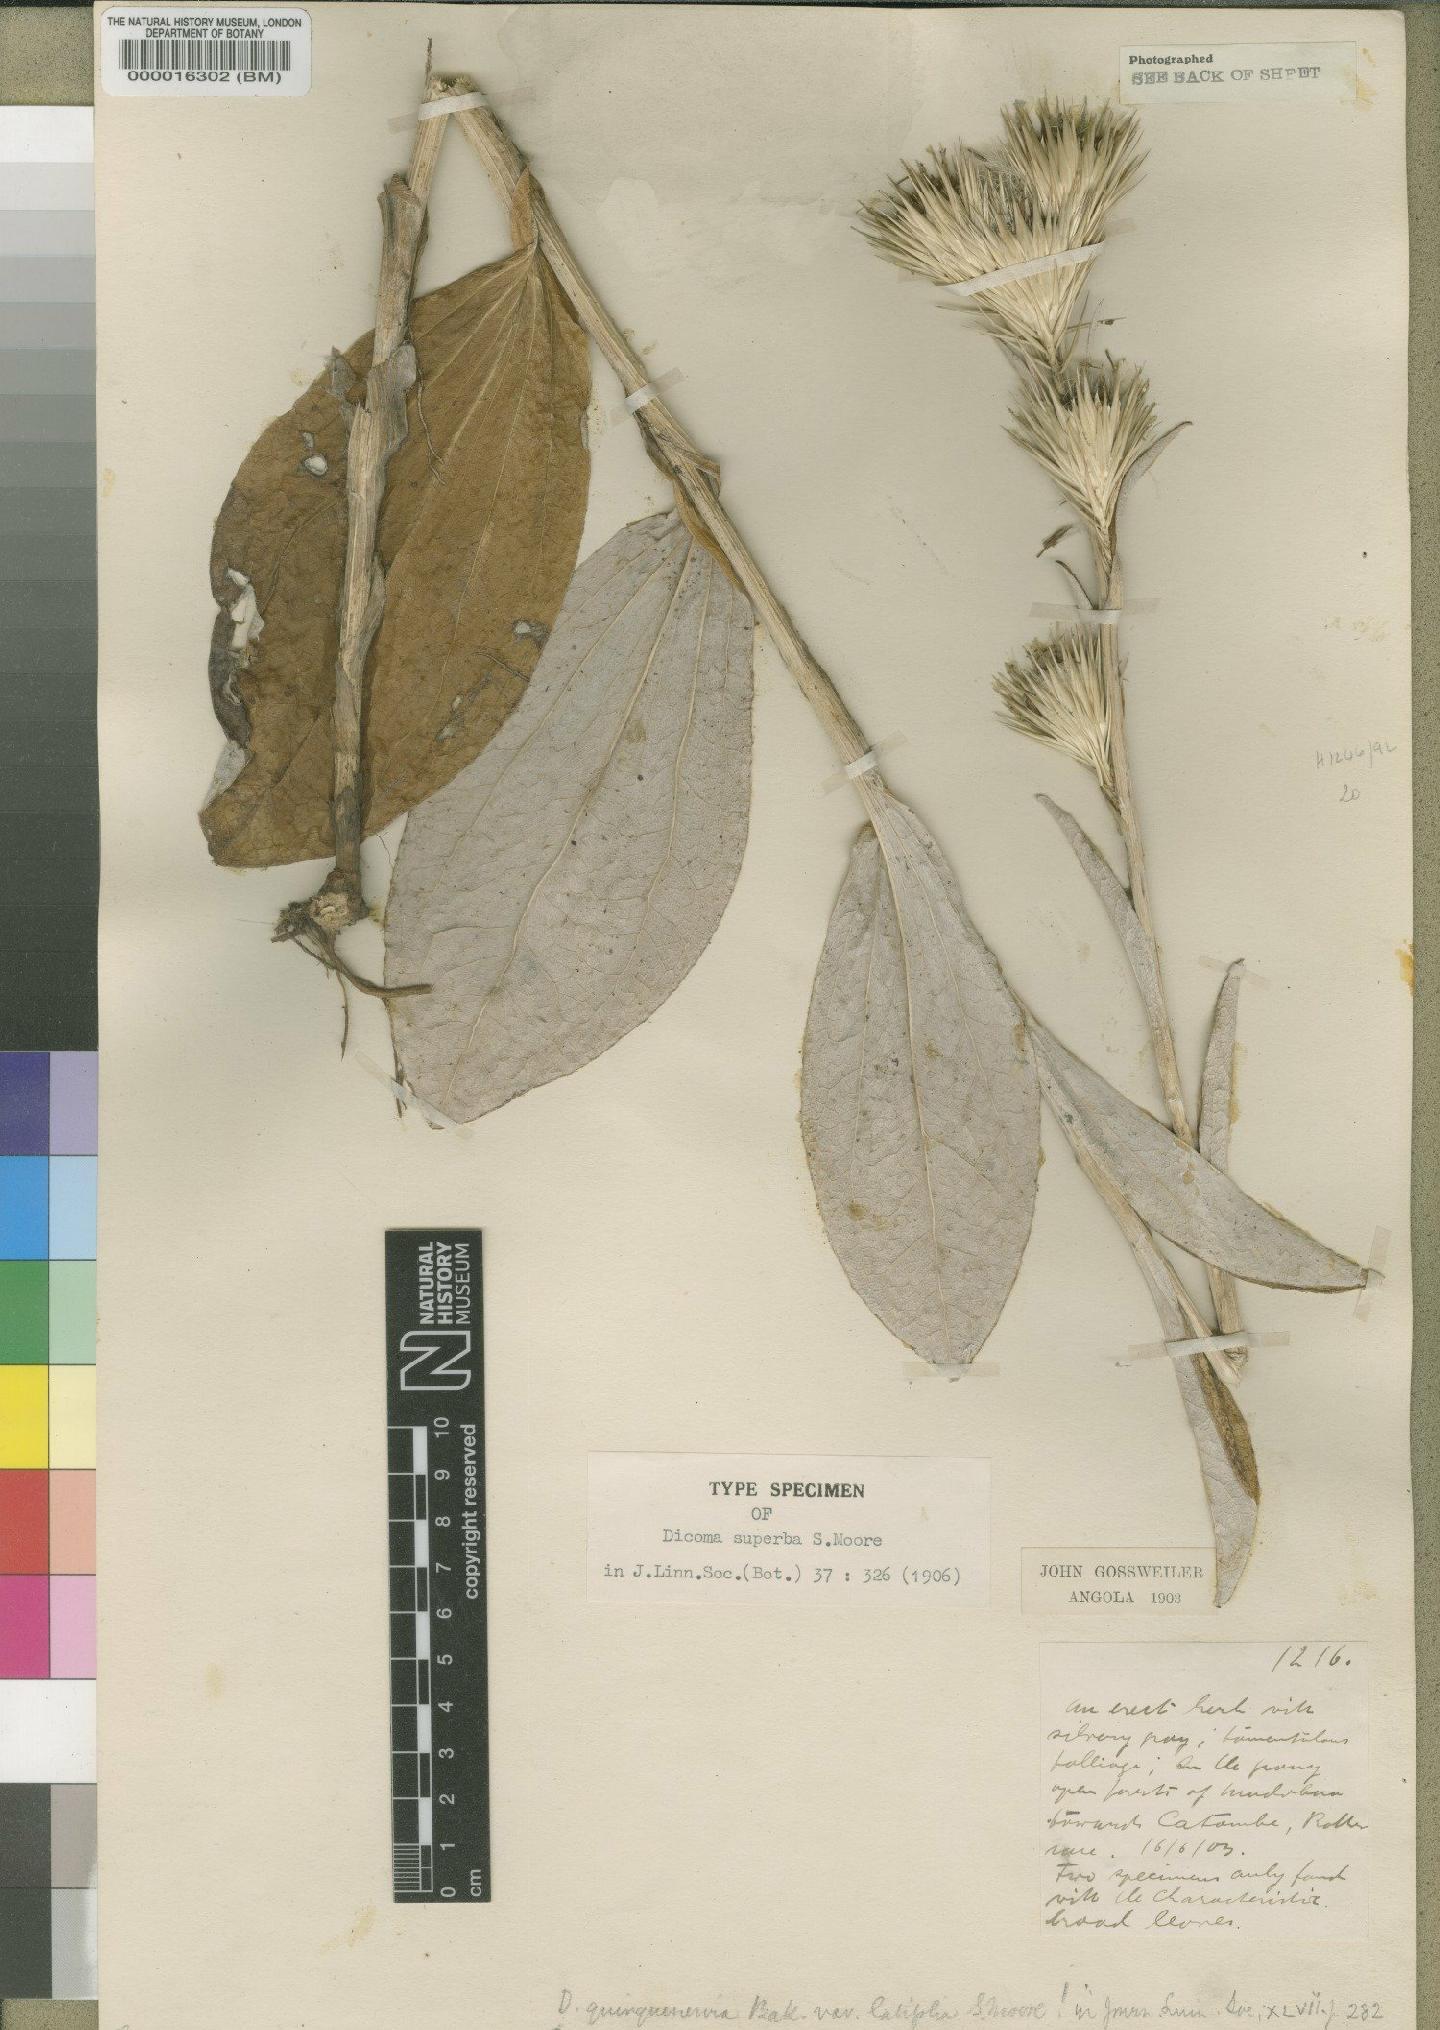 To NHMUK collection (Dicoma quinquenervia var. latifolia Moore; Holotype; NHMUK:ecatalogue:4553231)